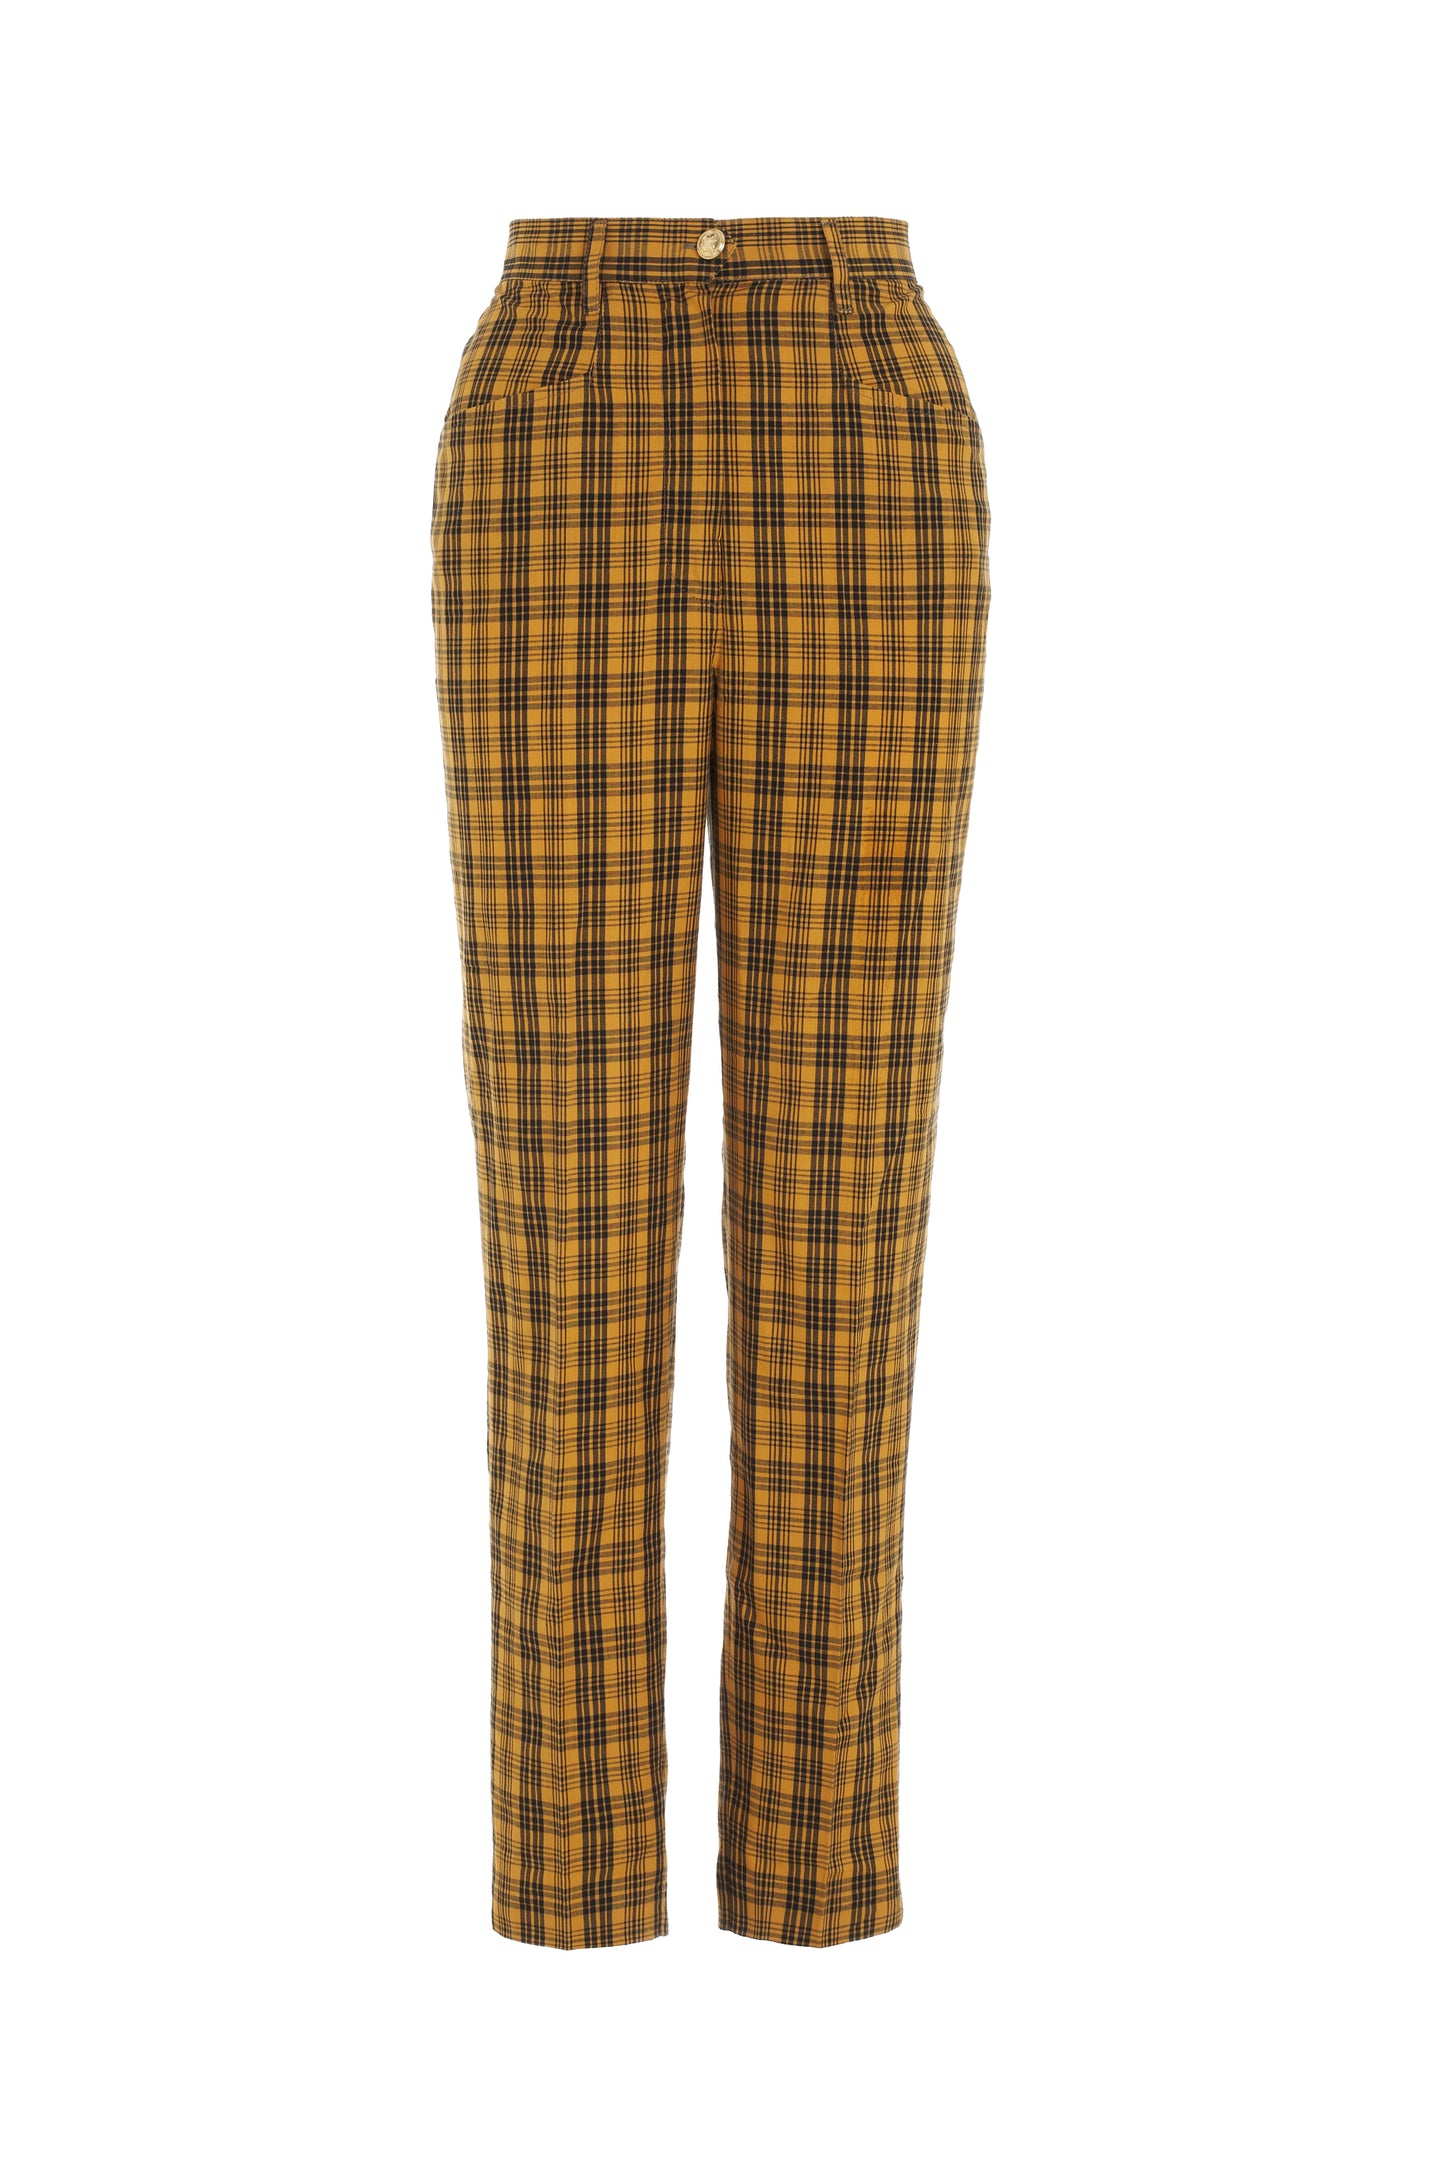 Marcello Rubinacci black & yellow plaid trousers